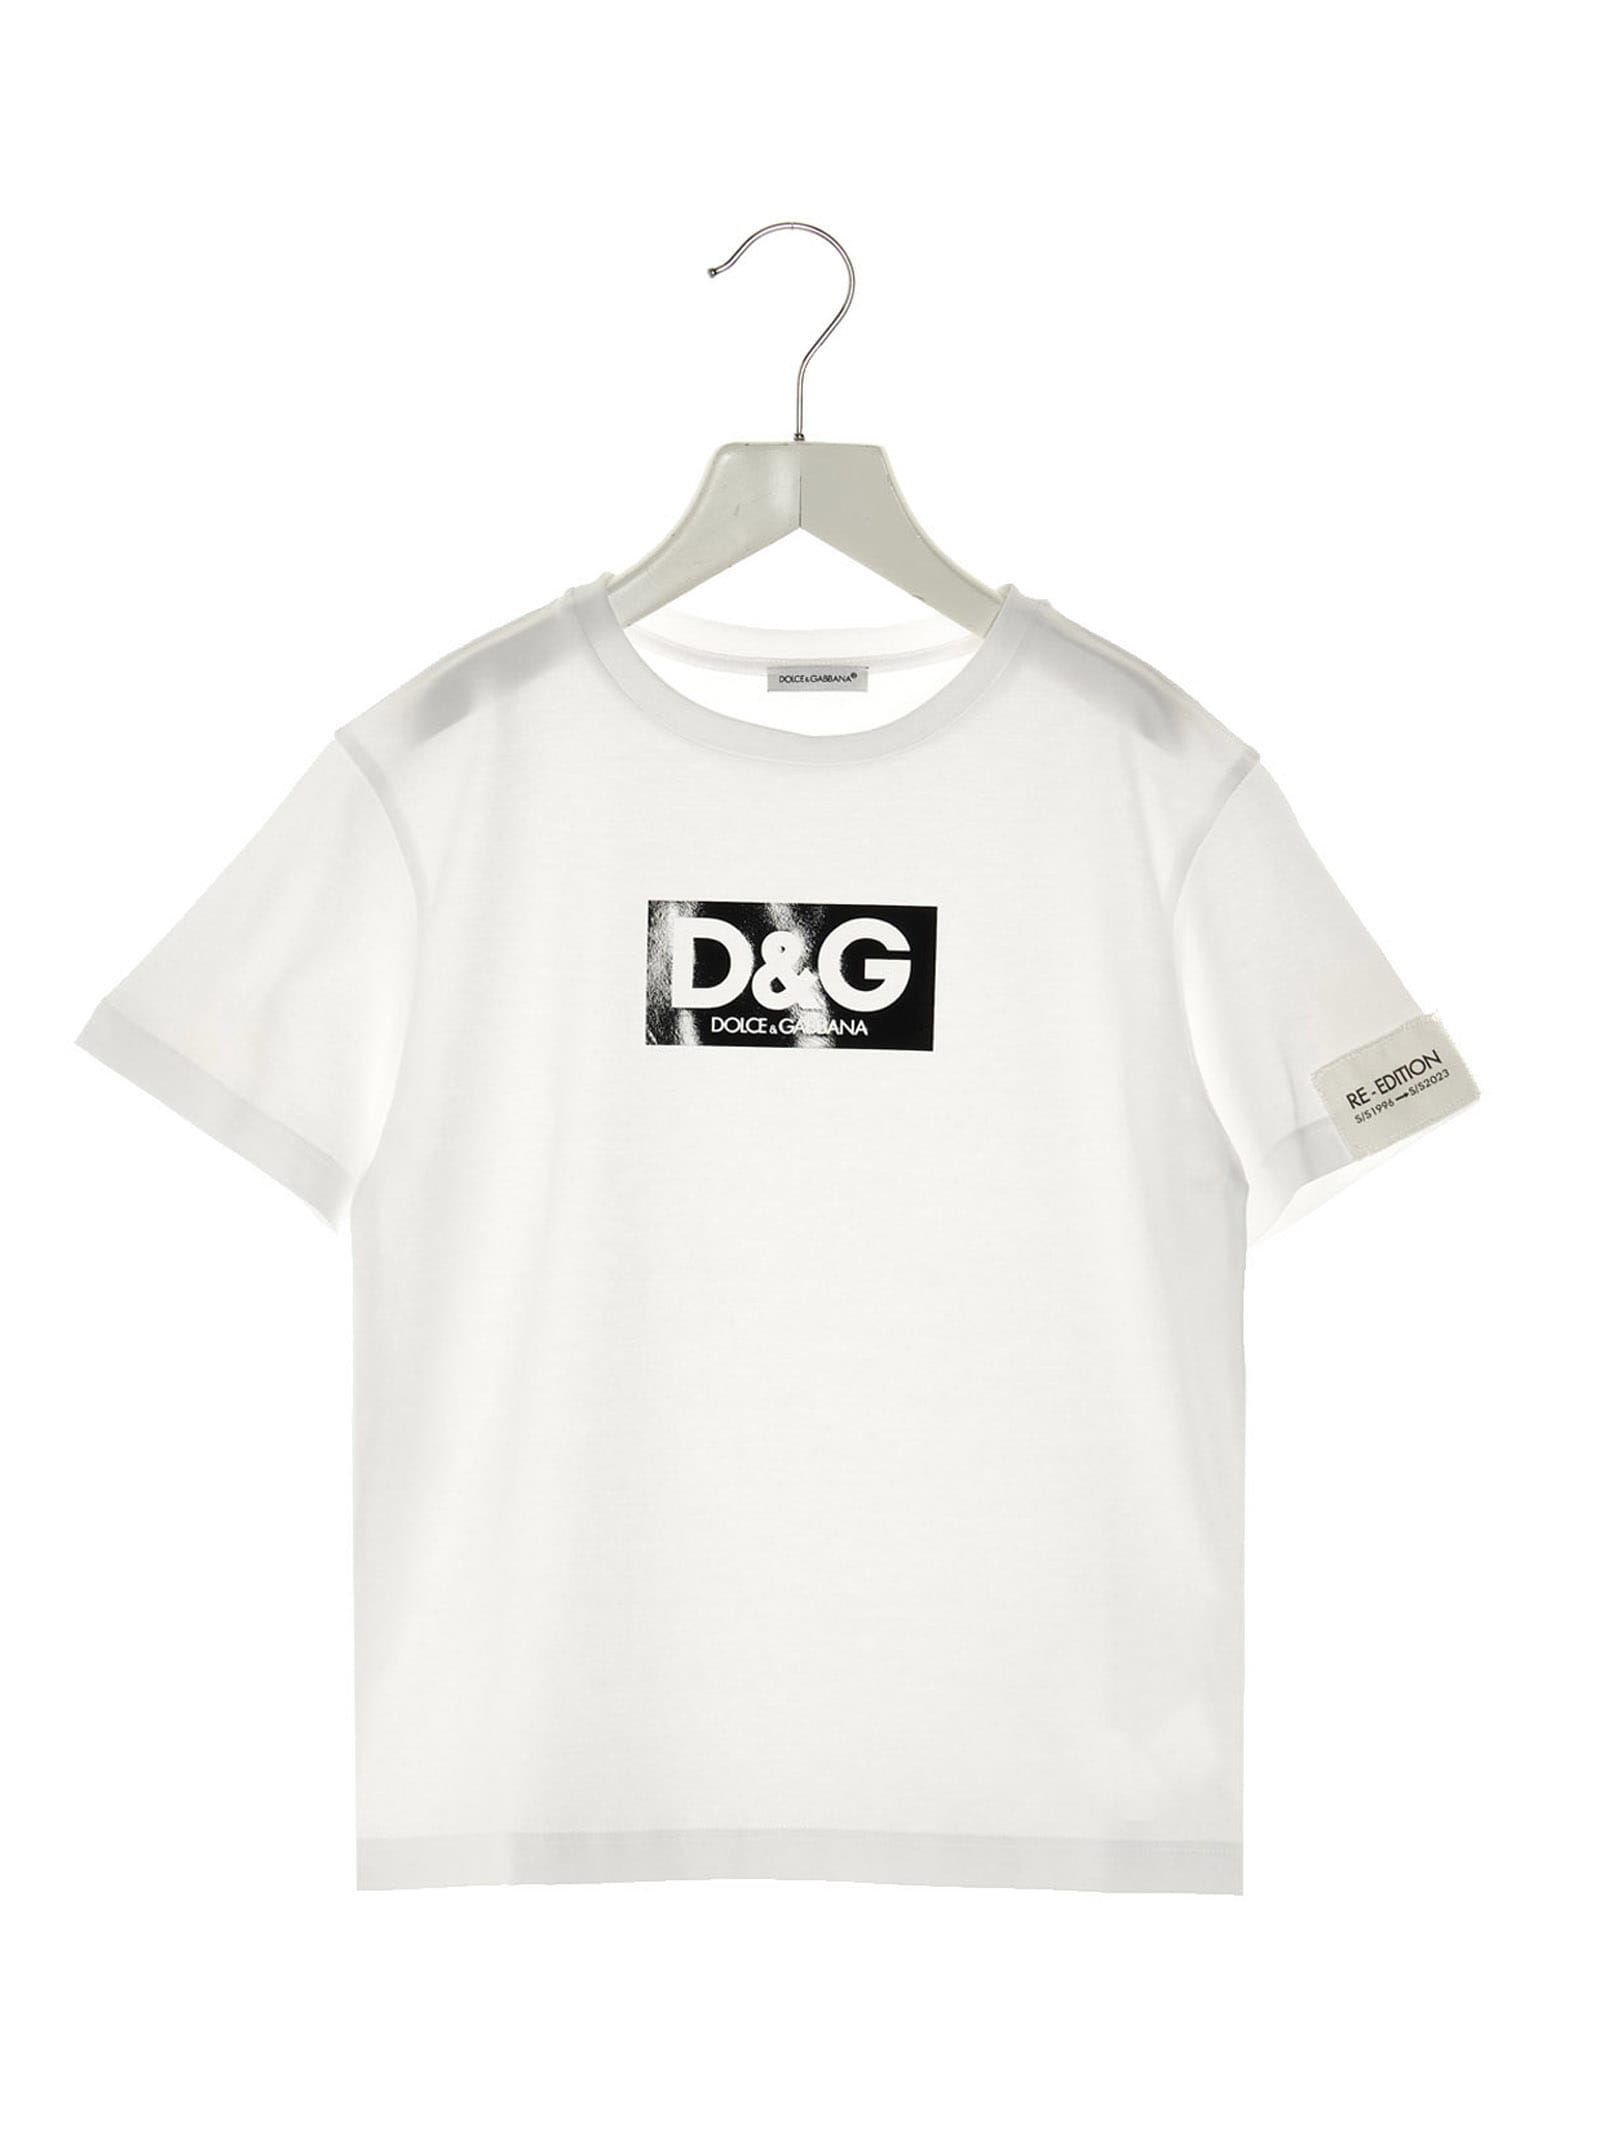 Dolce & Gabbana re-edition S/s 1996 T-shirt